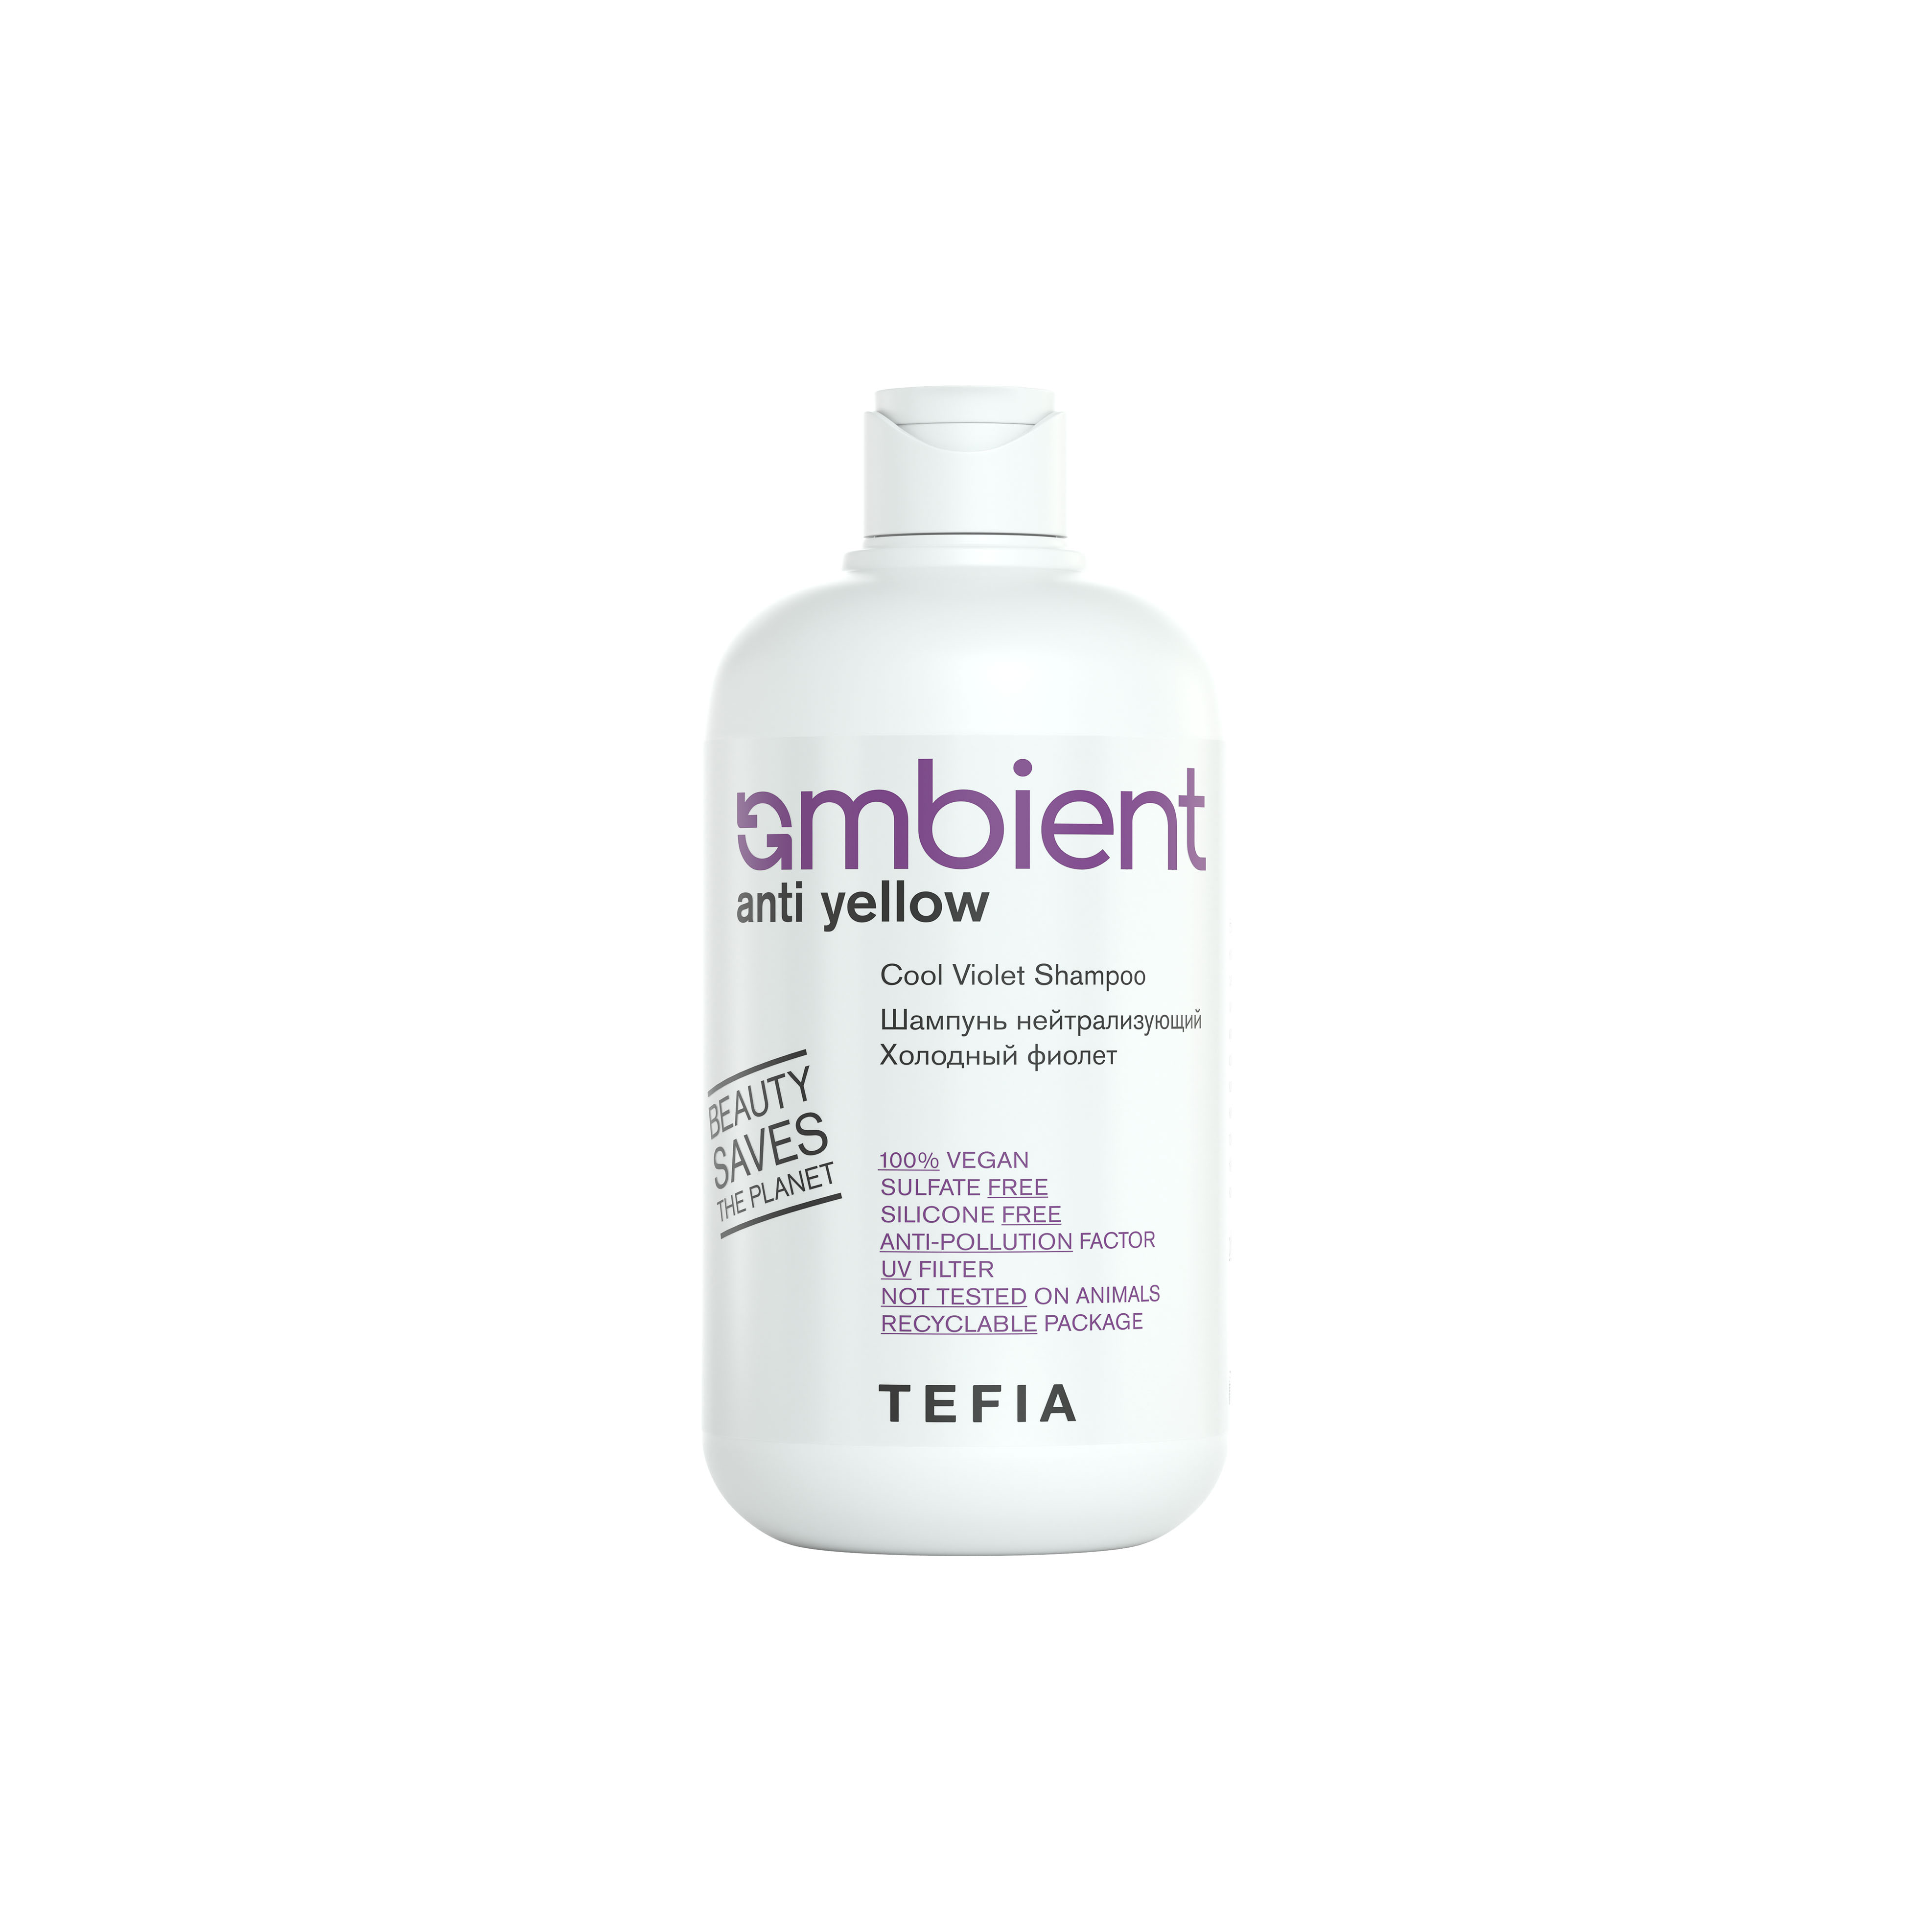 Шампунь нейтрализующий холодный фиолет TEFIA AMBIENT Anti Yellow 250 мл tefia ambient бессульфатный нейтрализующий шампунь холодный фиолет cool violet shampoo 250 мл